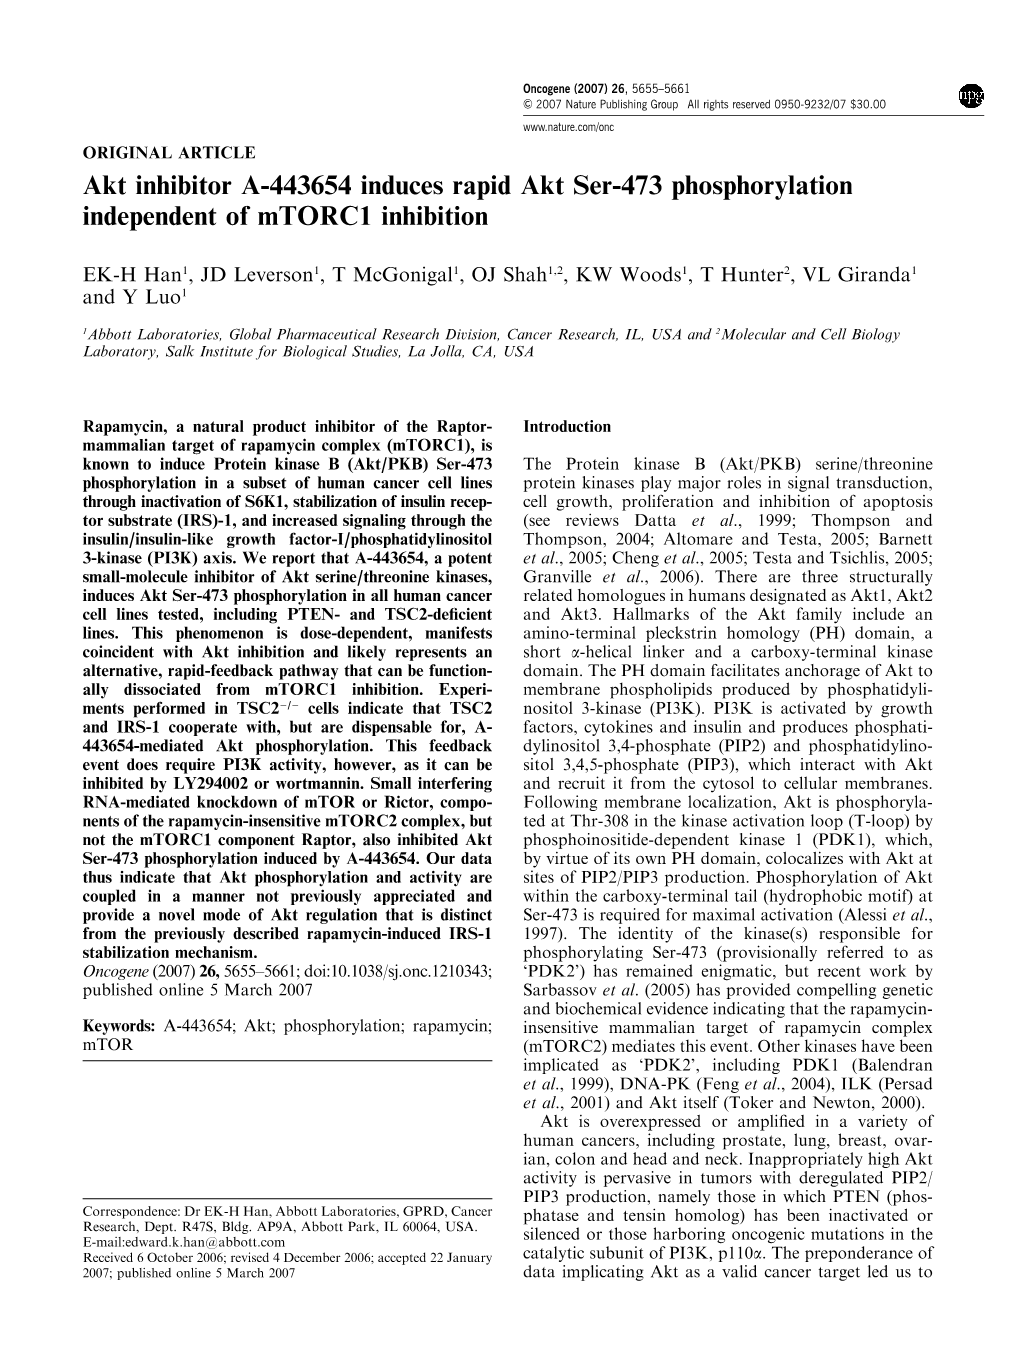 Akt Inhibitor A-443654 Induces Rapid Akt Ser-473 Phosphorylation Independent of Mtorc1 Inhibition